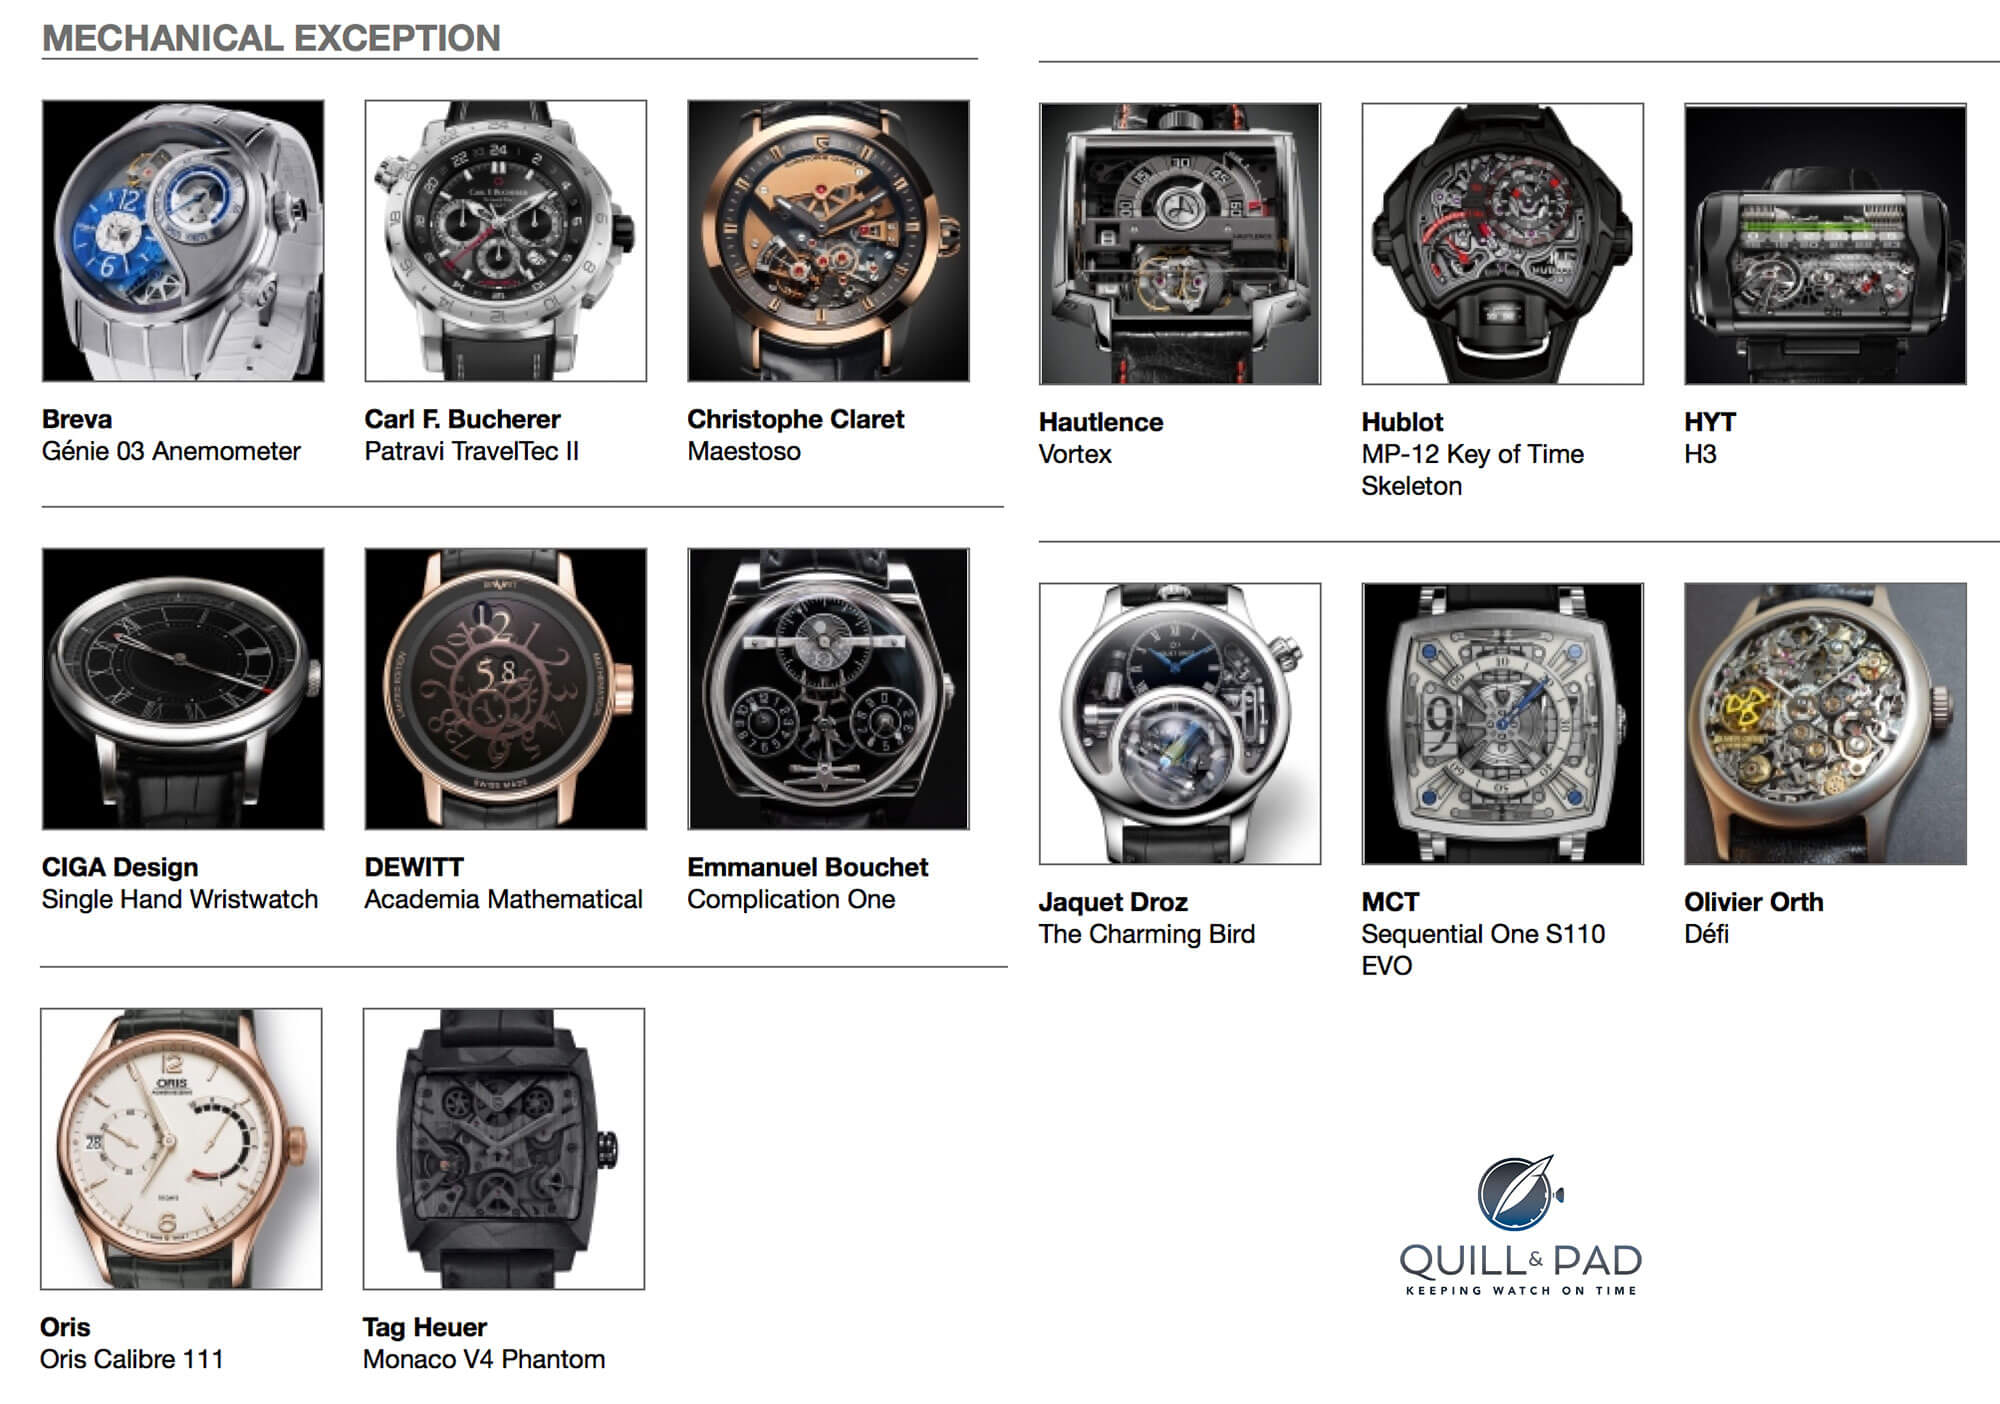 Mechanical Exception watches entered in the 2015 Grand Prix d’Horlogerie de Genève